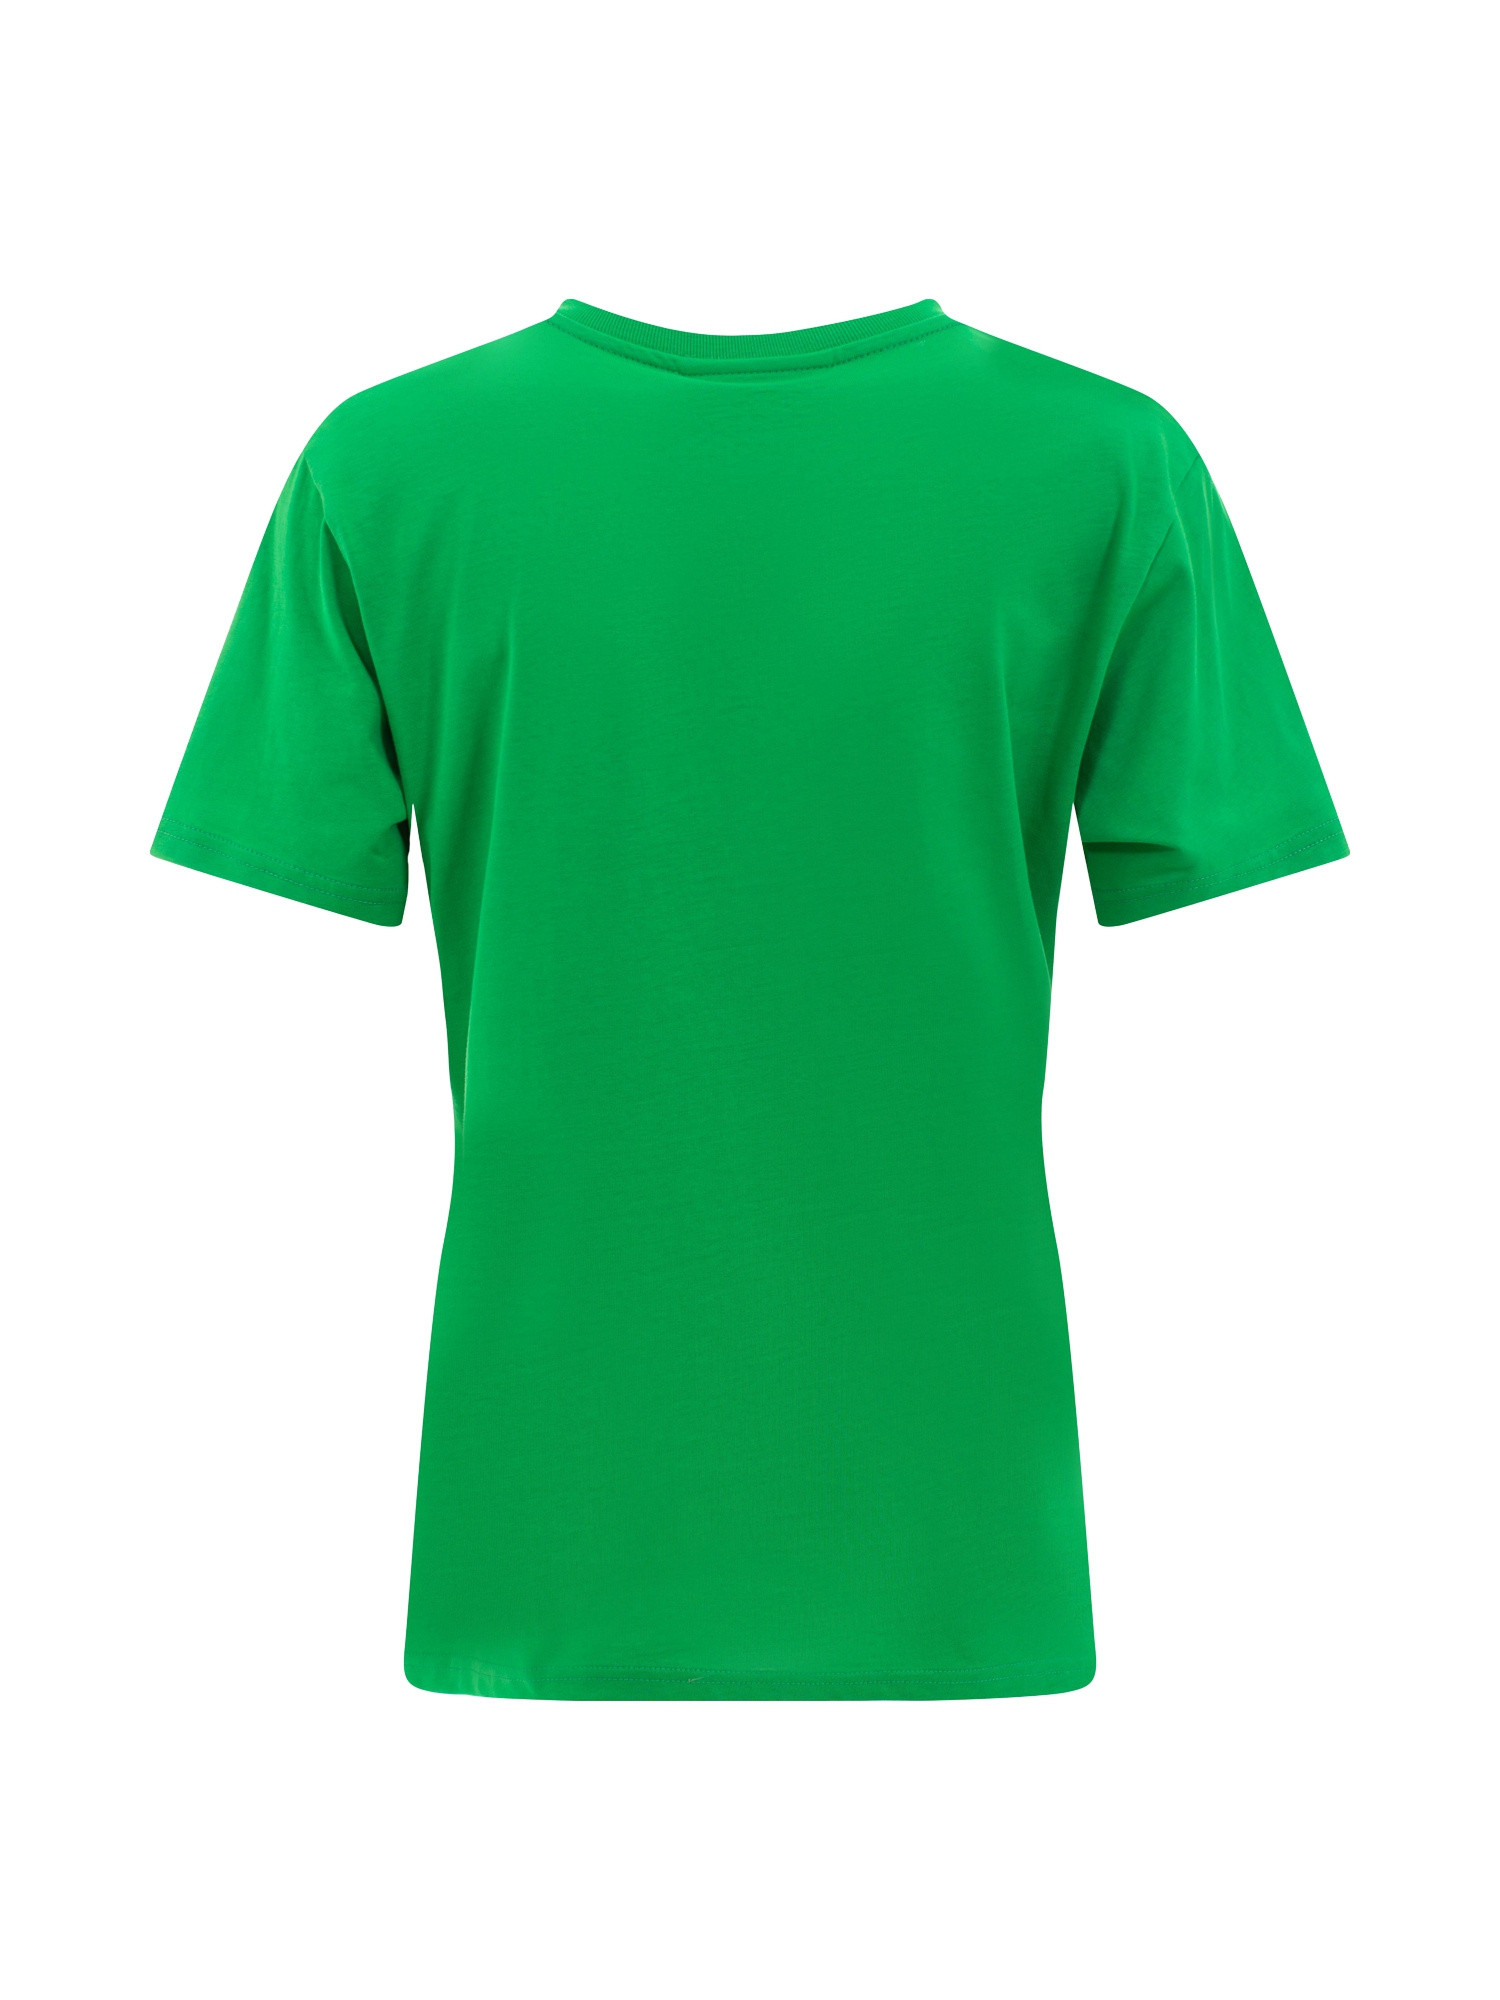 Chiara Ferragni - T-shirt with logo print, Green, large image number 1